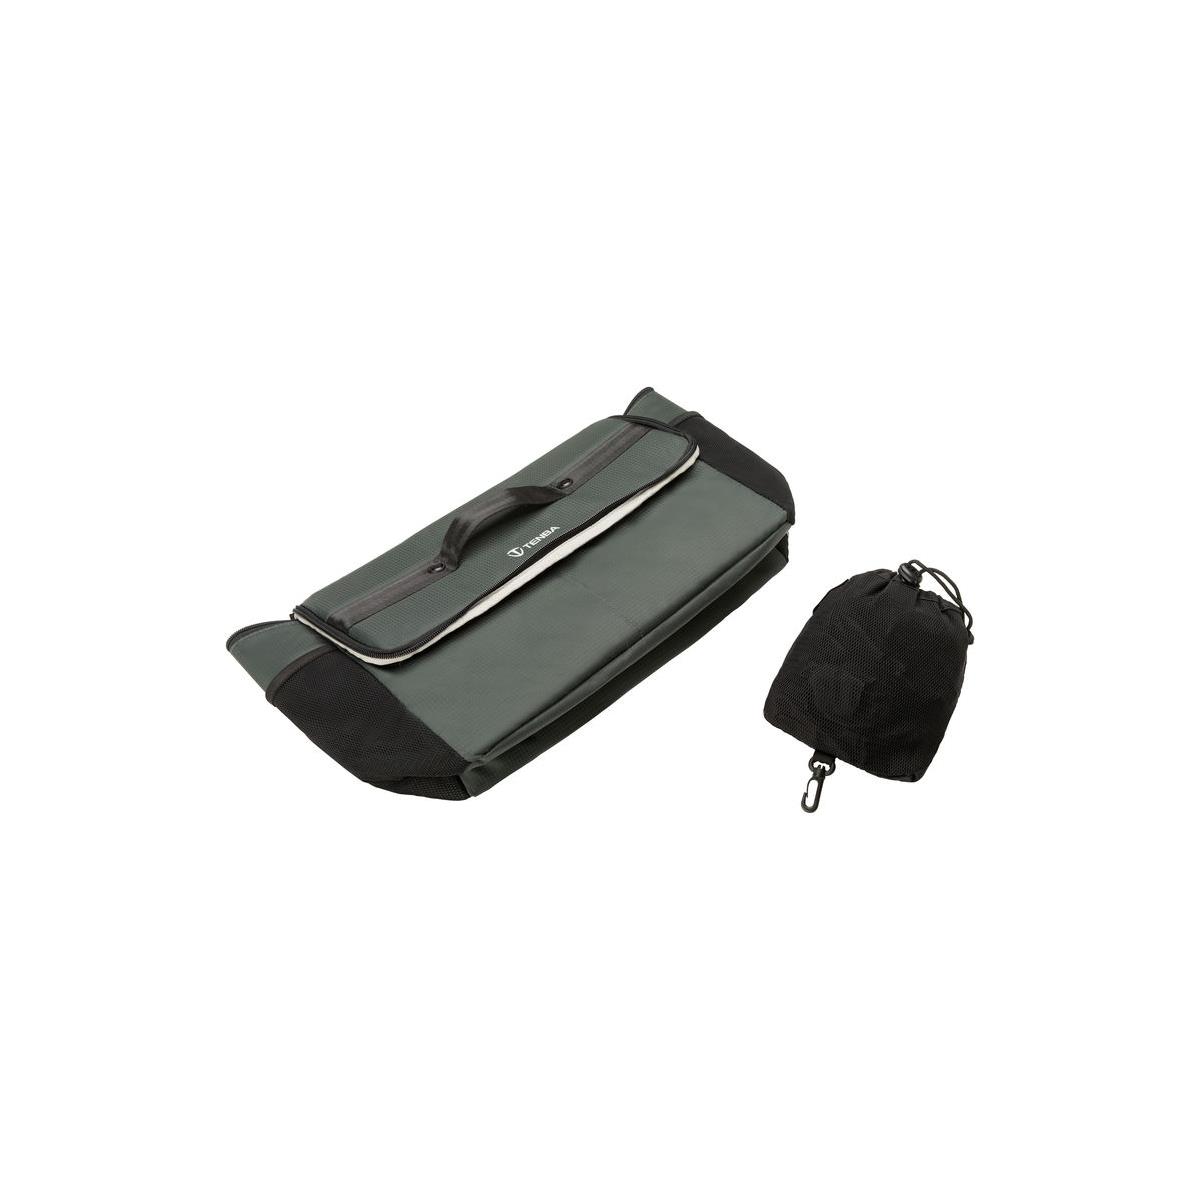 Tenba 636-284 BYOB/Packlite 13 Flatpack  Bundle with Insert and Packlite Bag (Black and Gray)